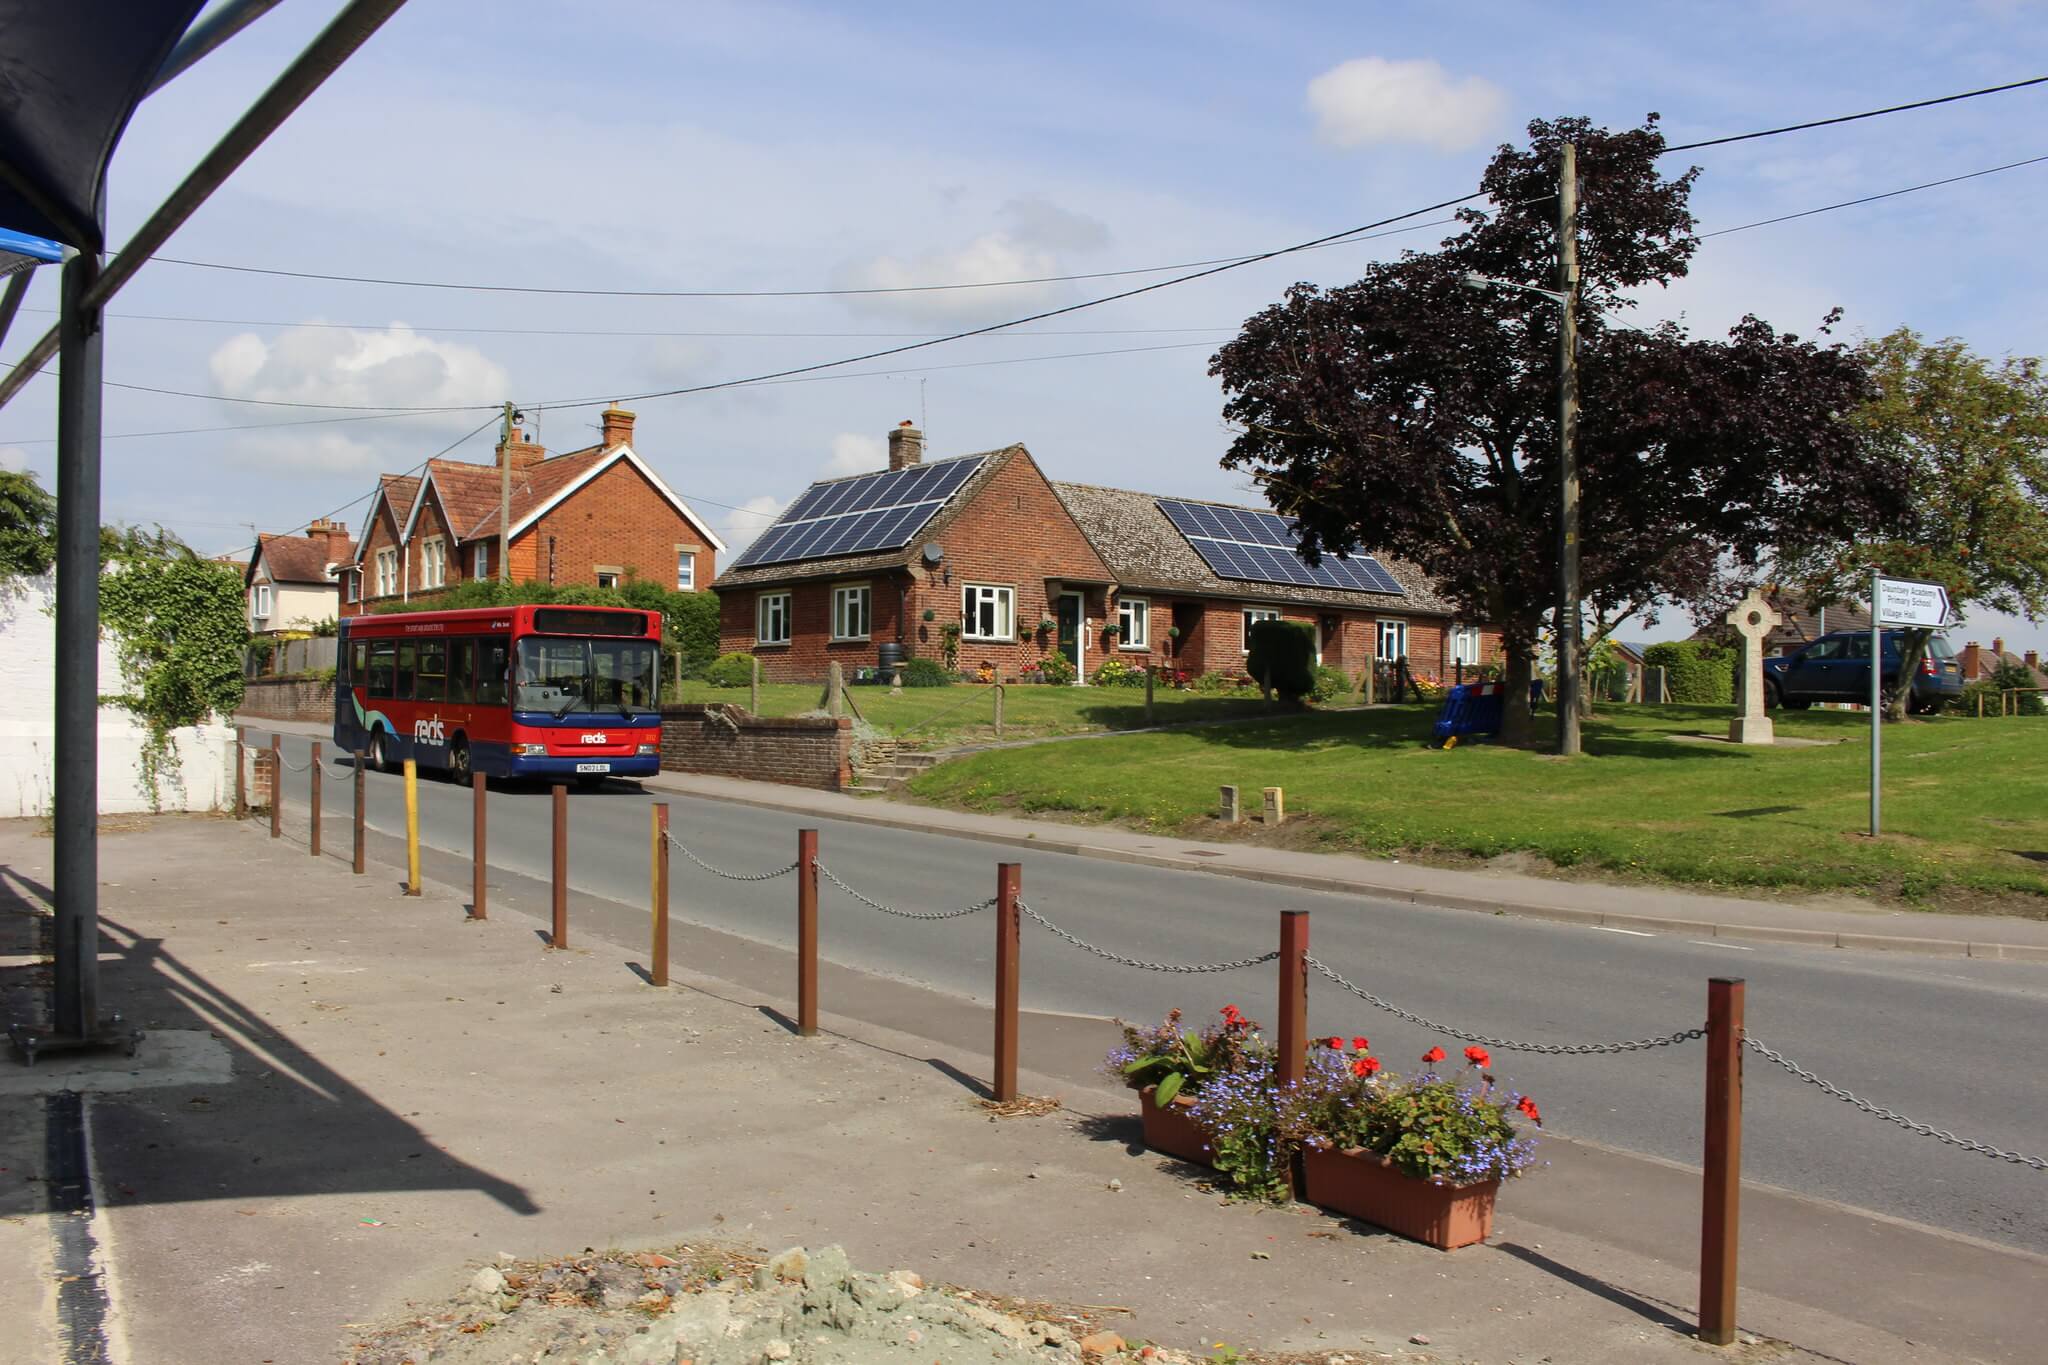 Salisbury Reds bus passing through rural Wiltshire